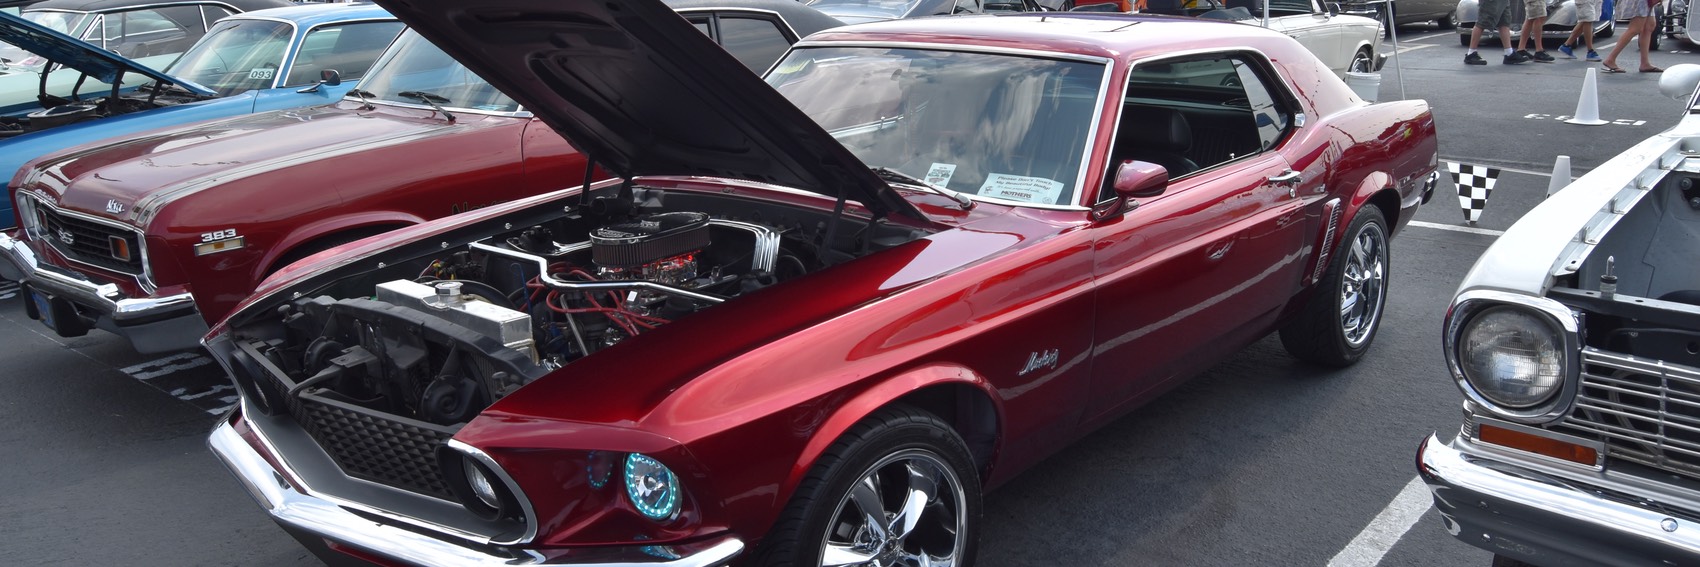 Classic Mustang in Reno